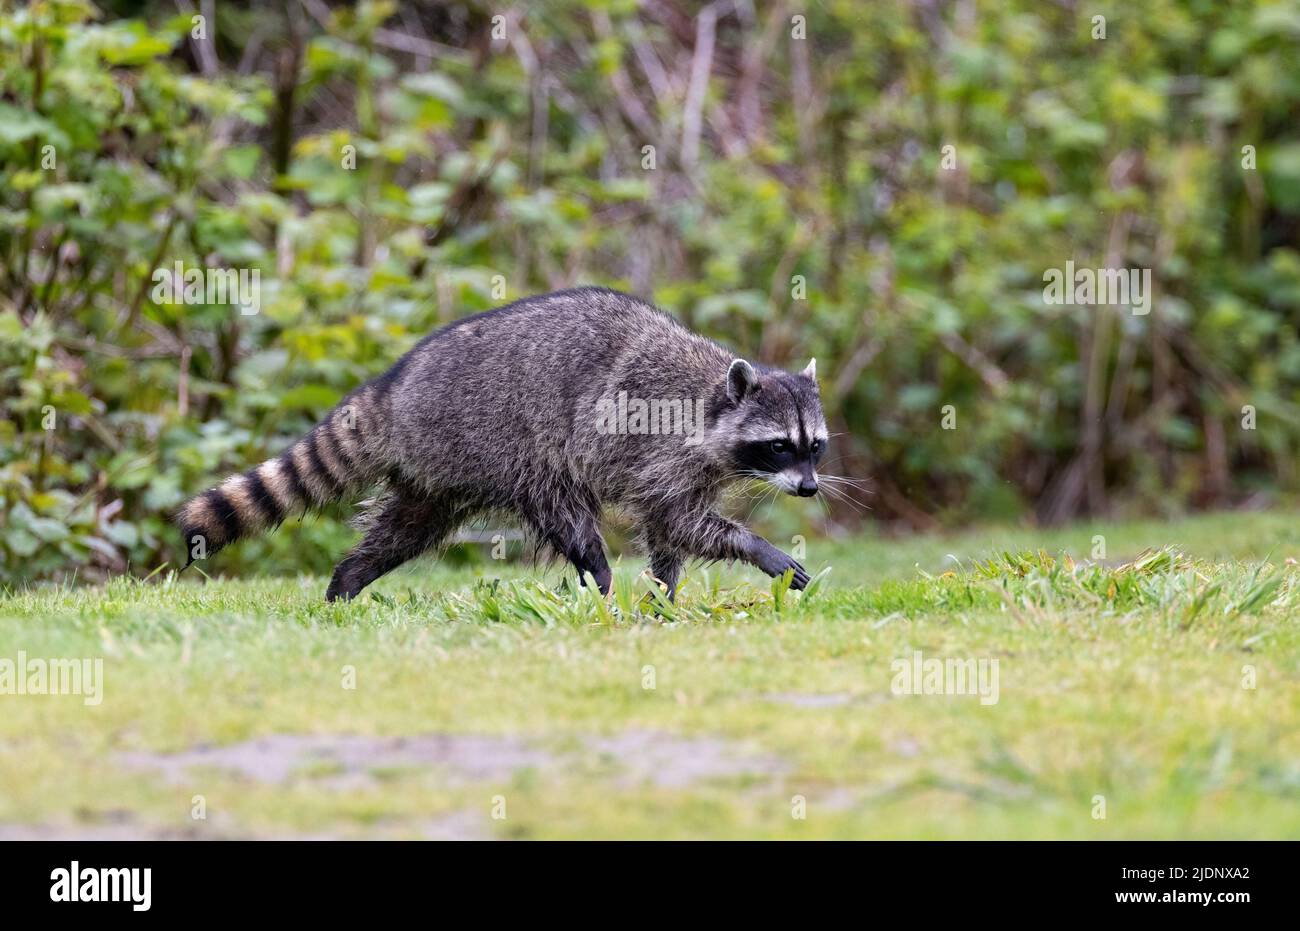 Wild Raccoon animal at Richmond BC Canada Stock Photo